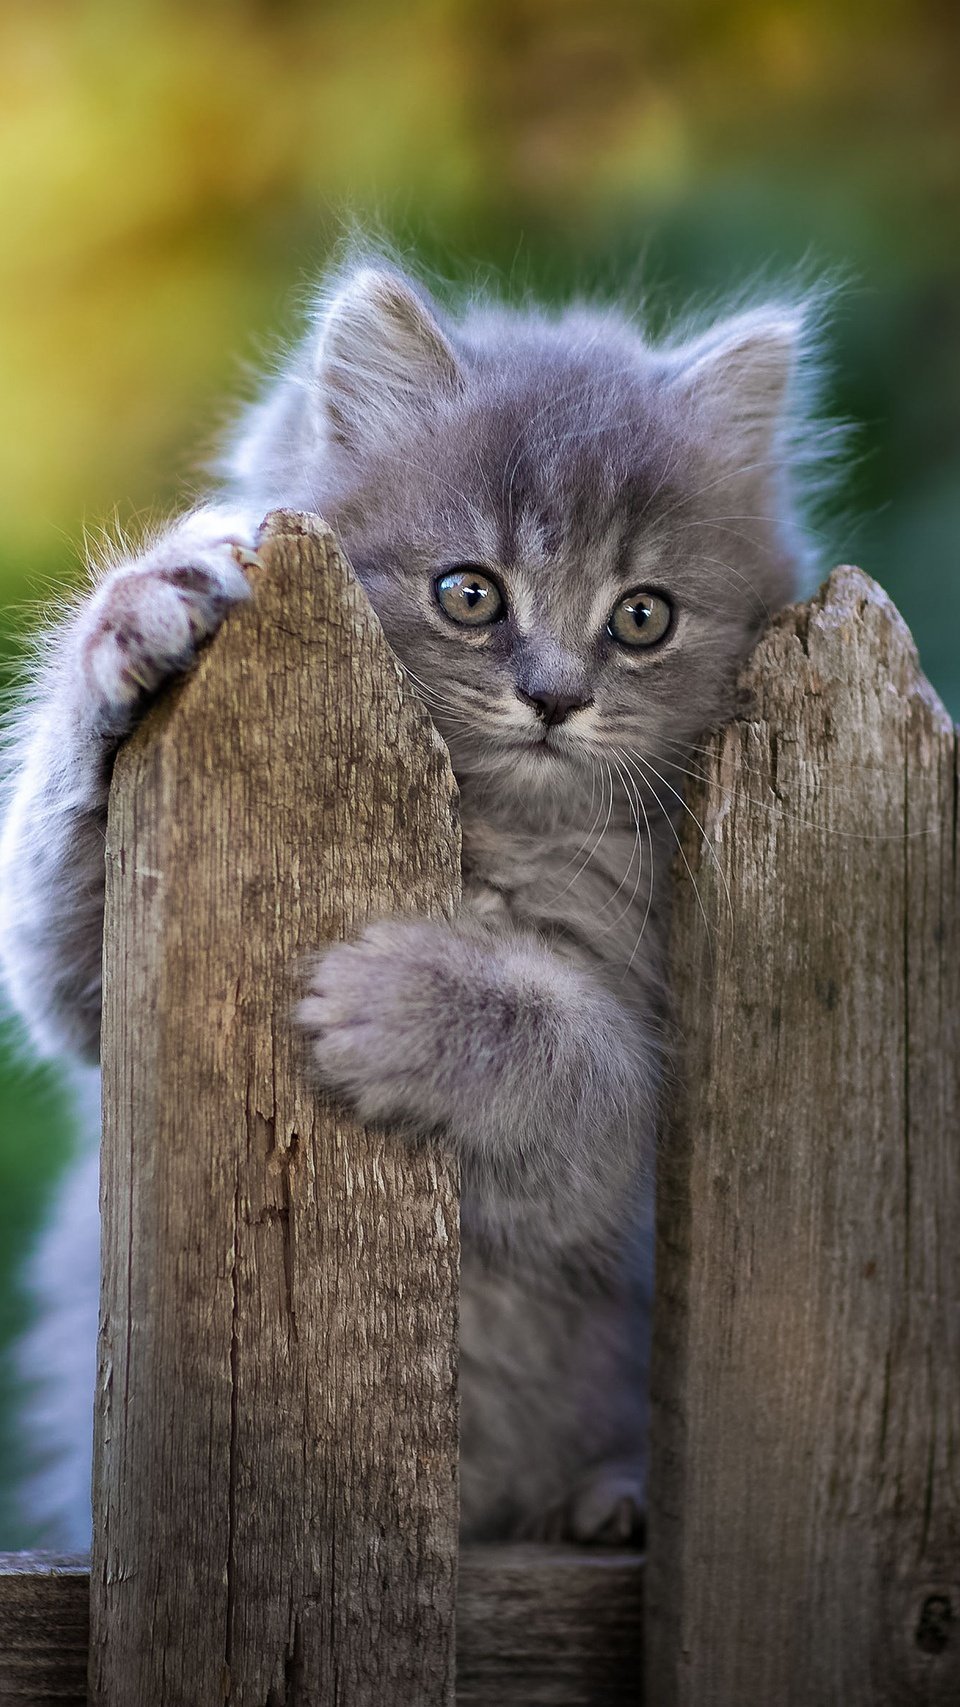 Wallpaper Cat in fence Vertical